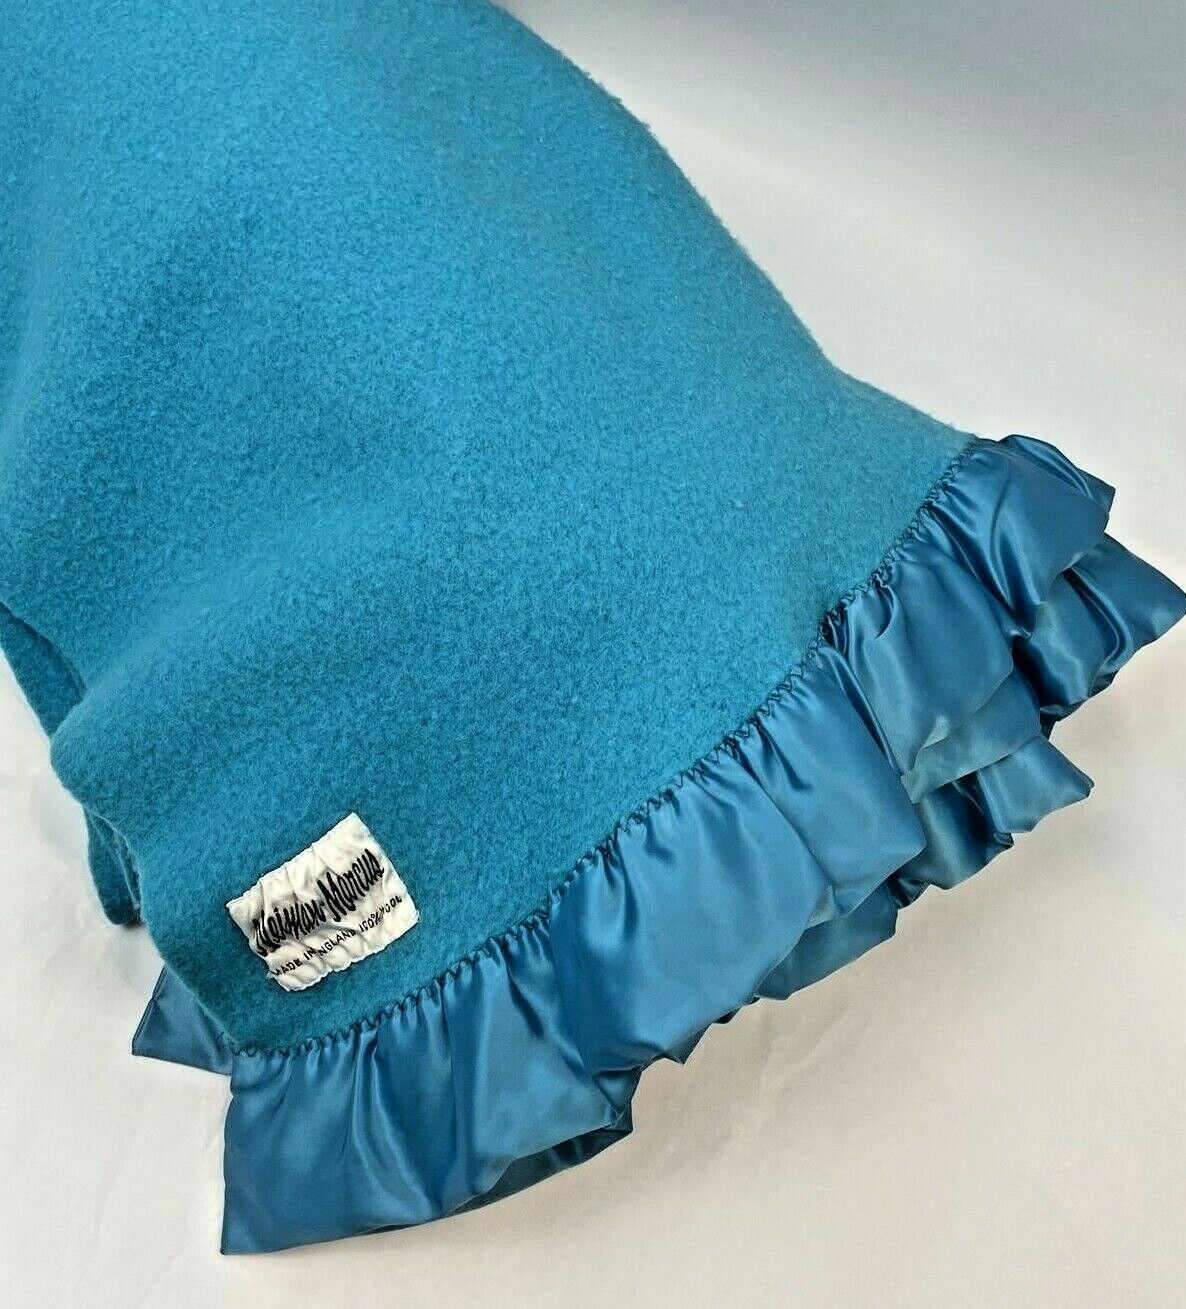 Vintage Neiman Marcus Satin Trim Blanket Italian Wool Turquoise Blue  I02 x 72 